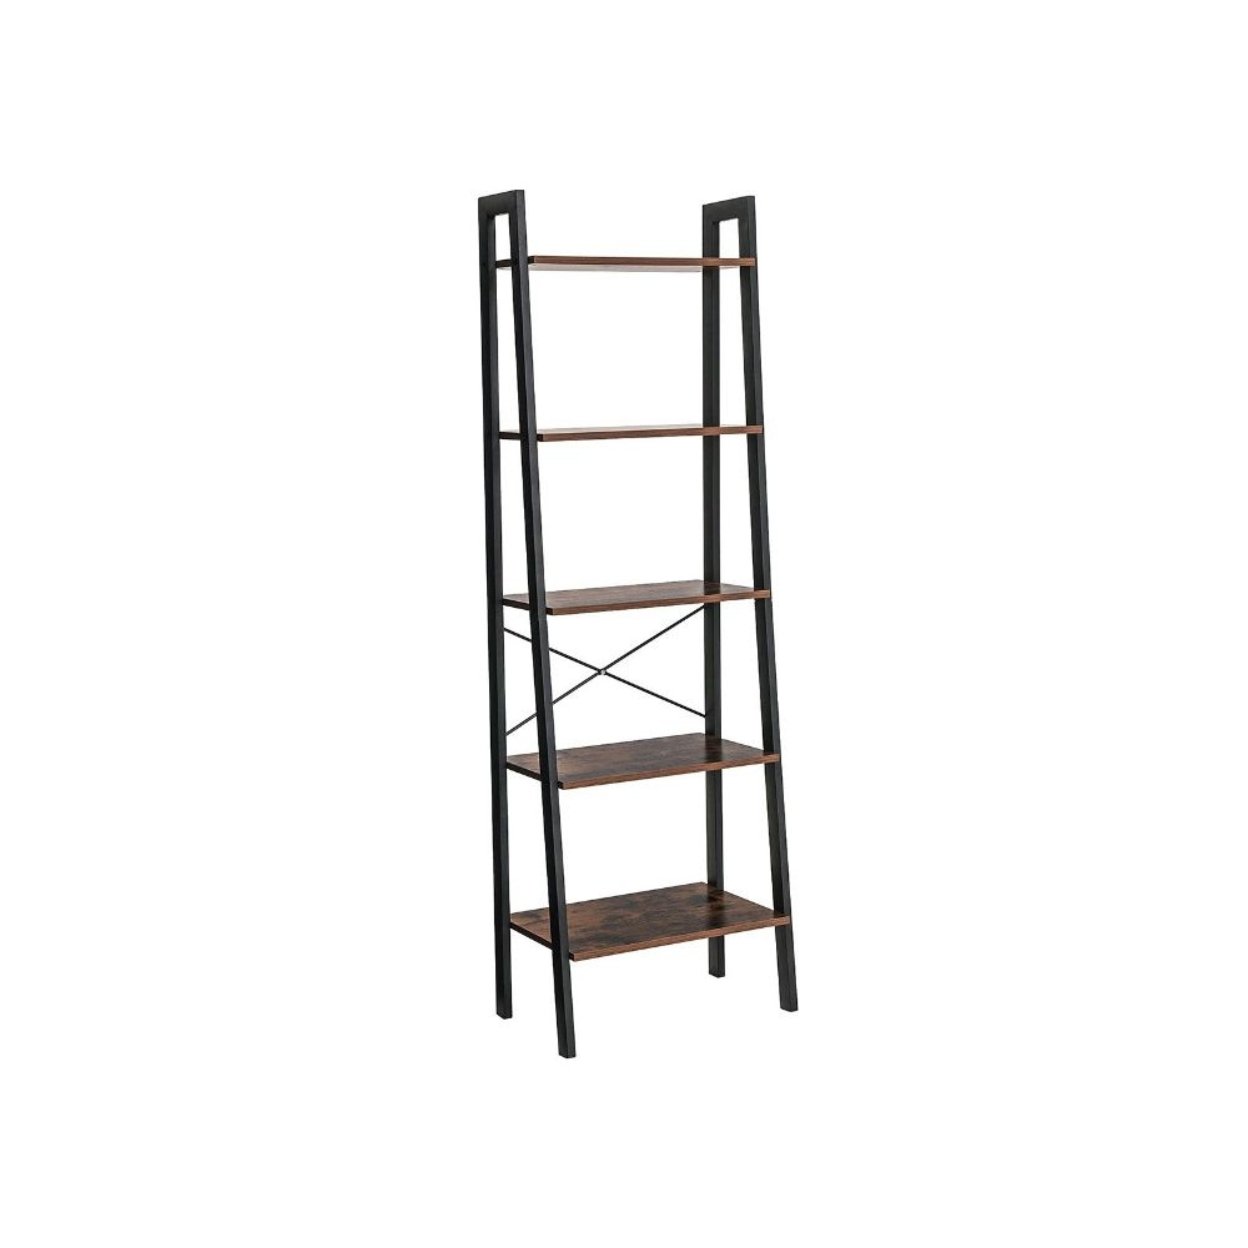 Five Tiered Rustic Wooden Ladder Shelf With Iron Framework, Brown And Black- Saltoro Sherpi